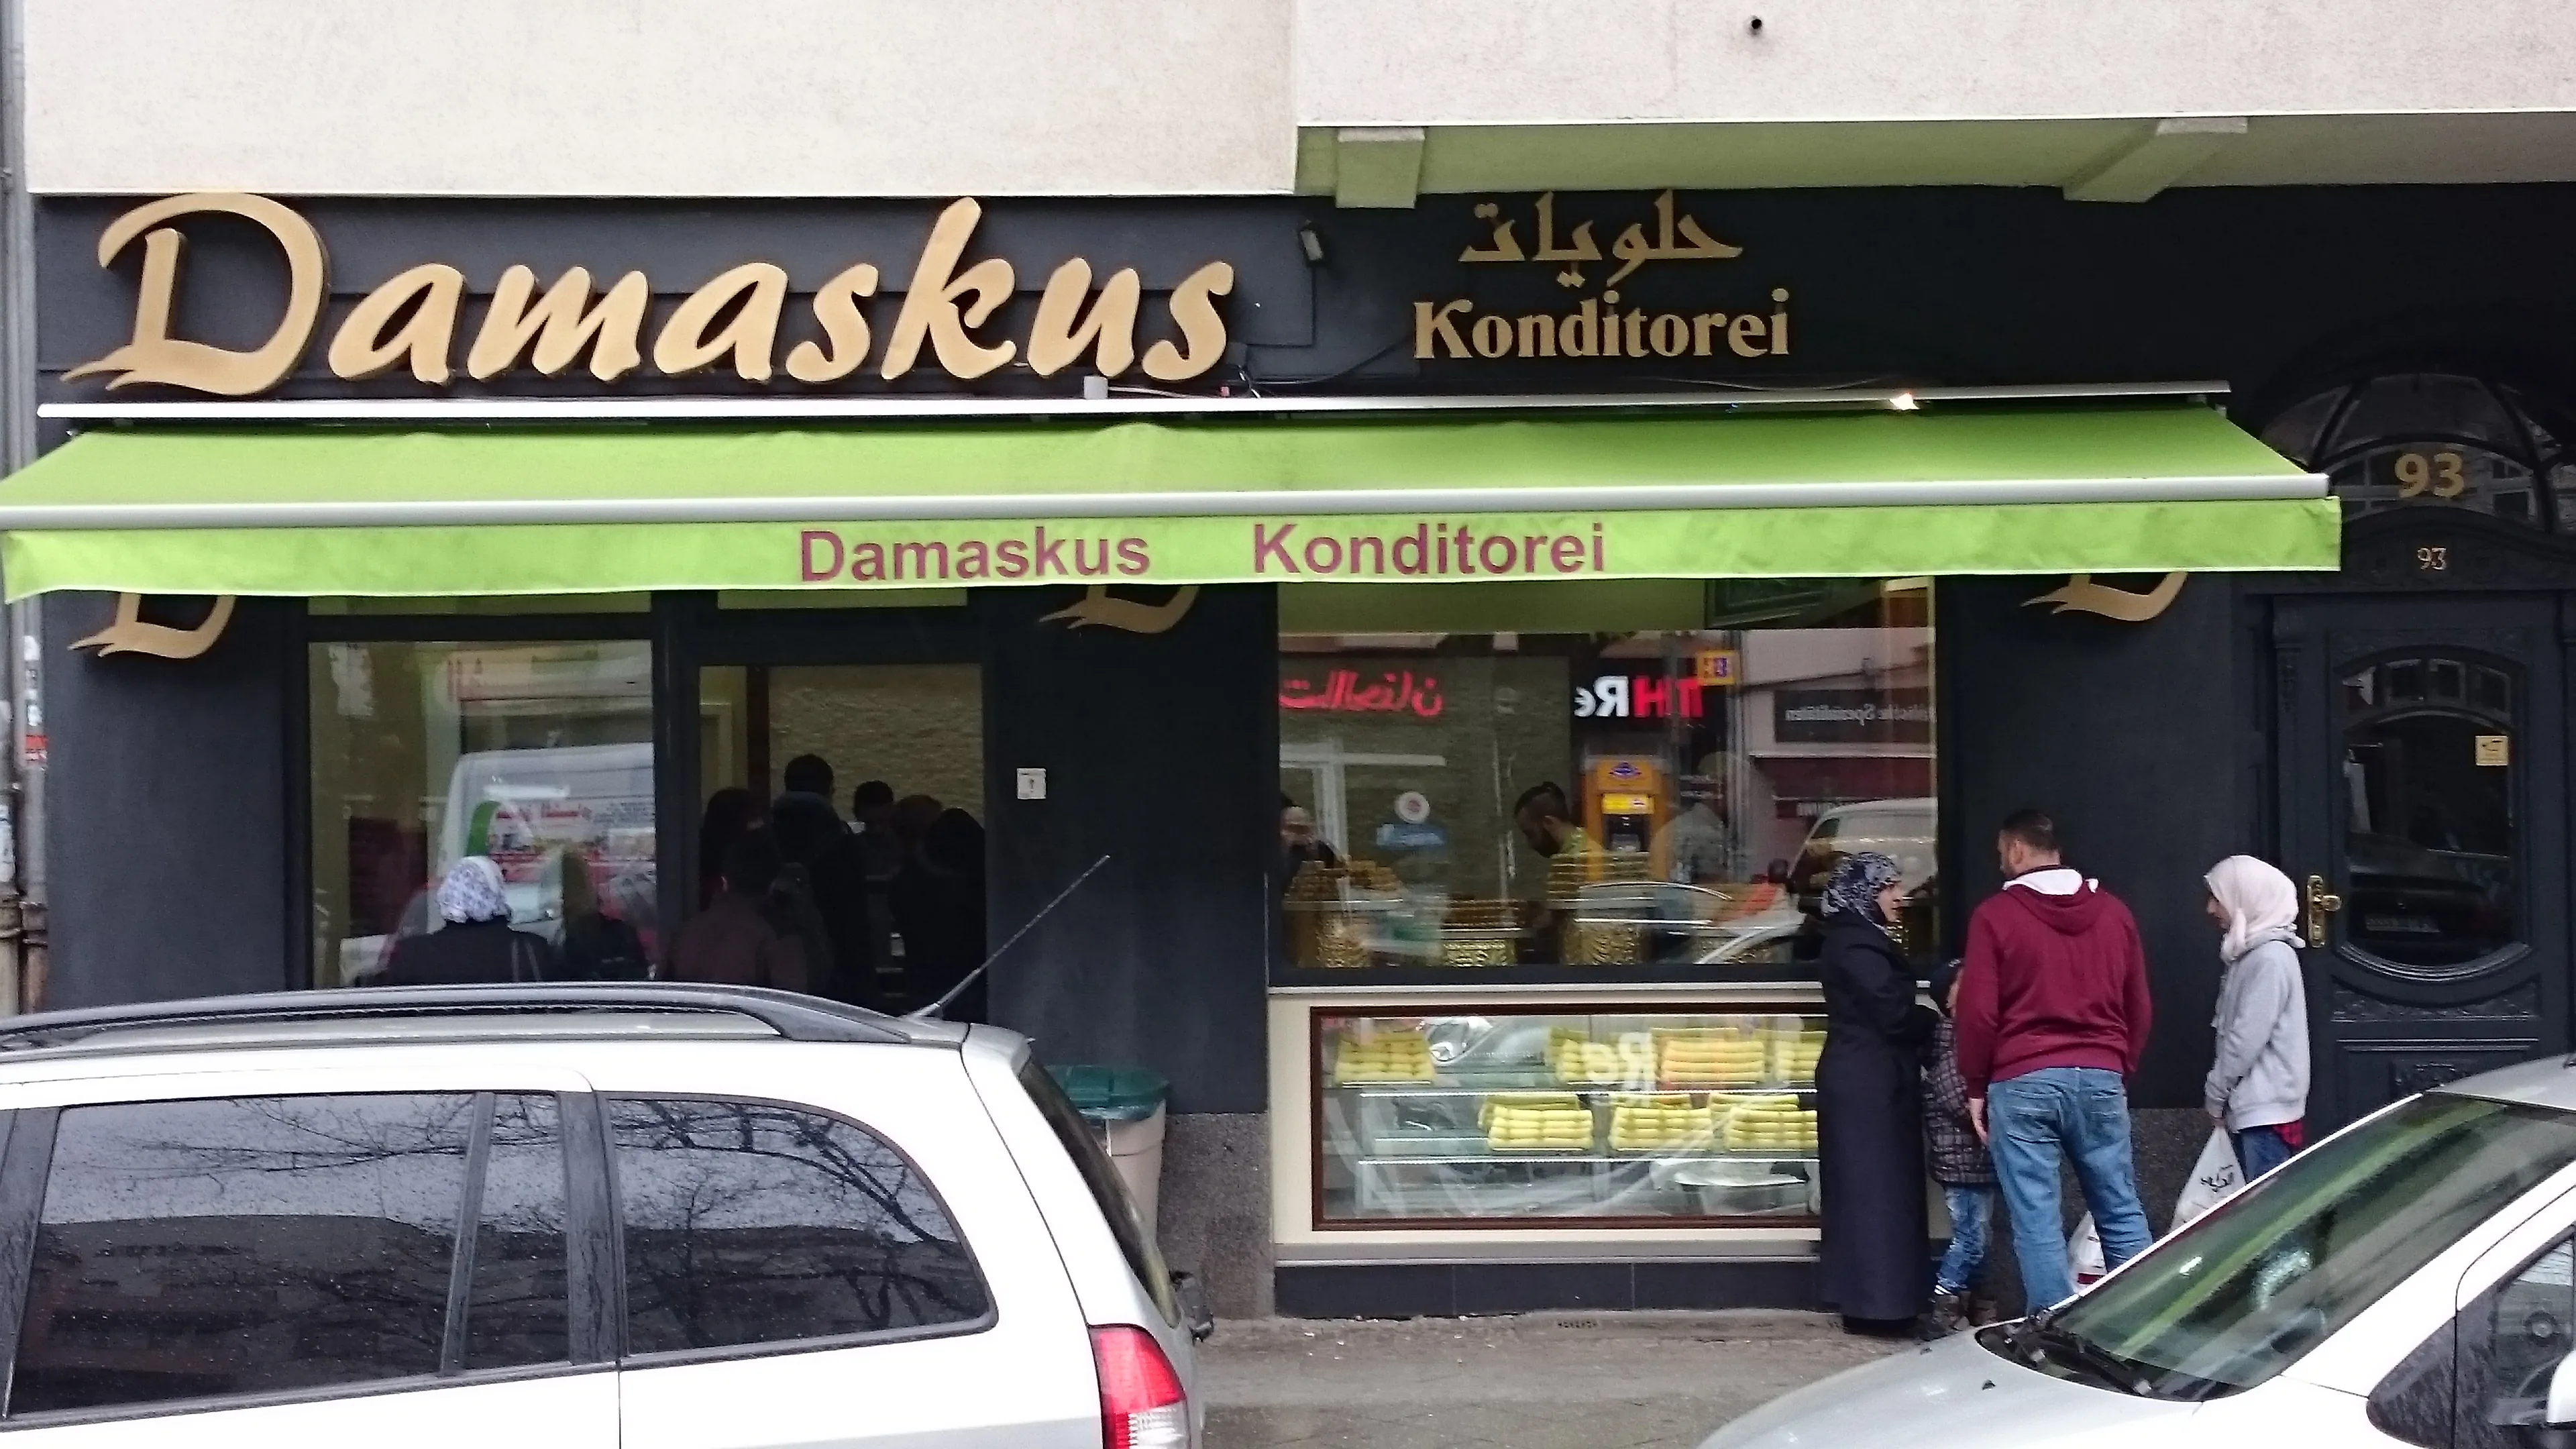 Konditorei Damaskus in Germany, europe | Baked Goods,Sweets - Country Helper